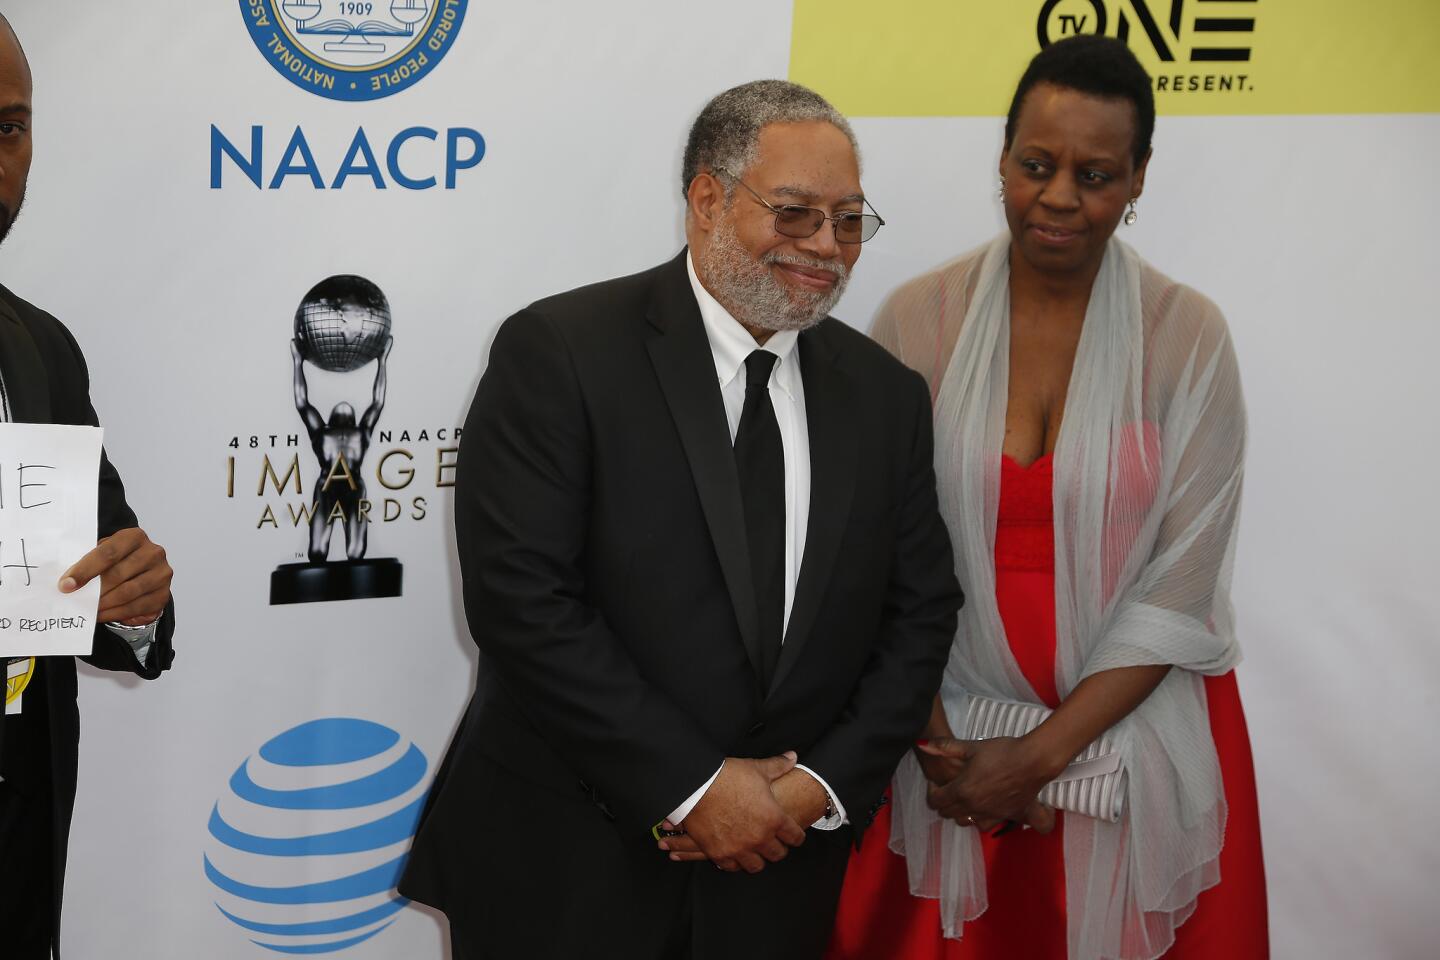 NAACP Awards 2017